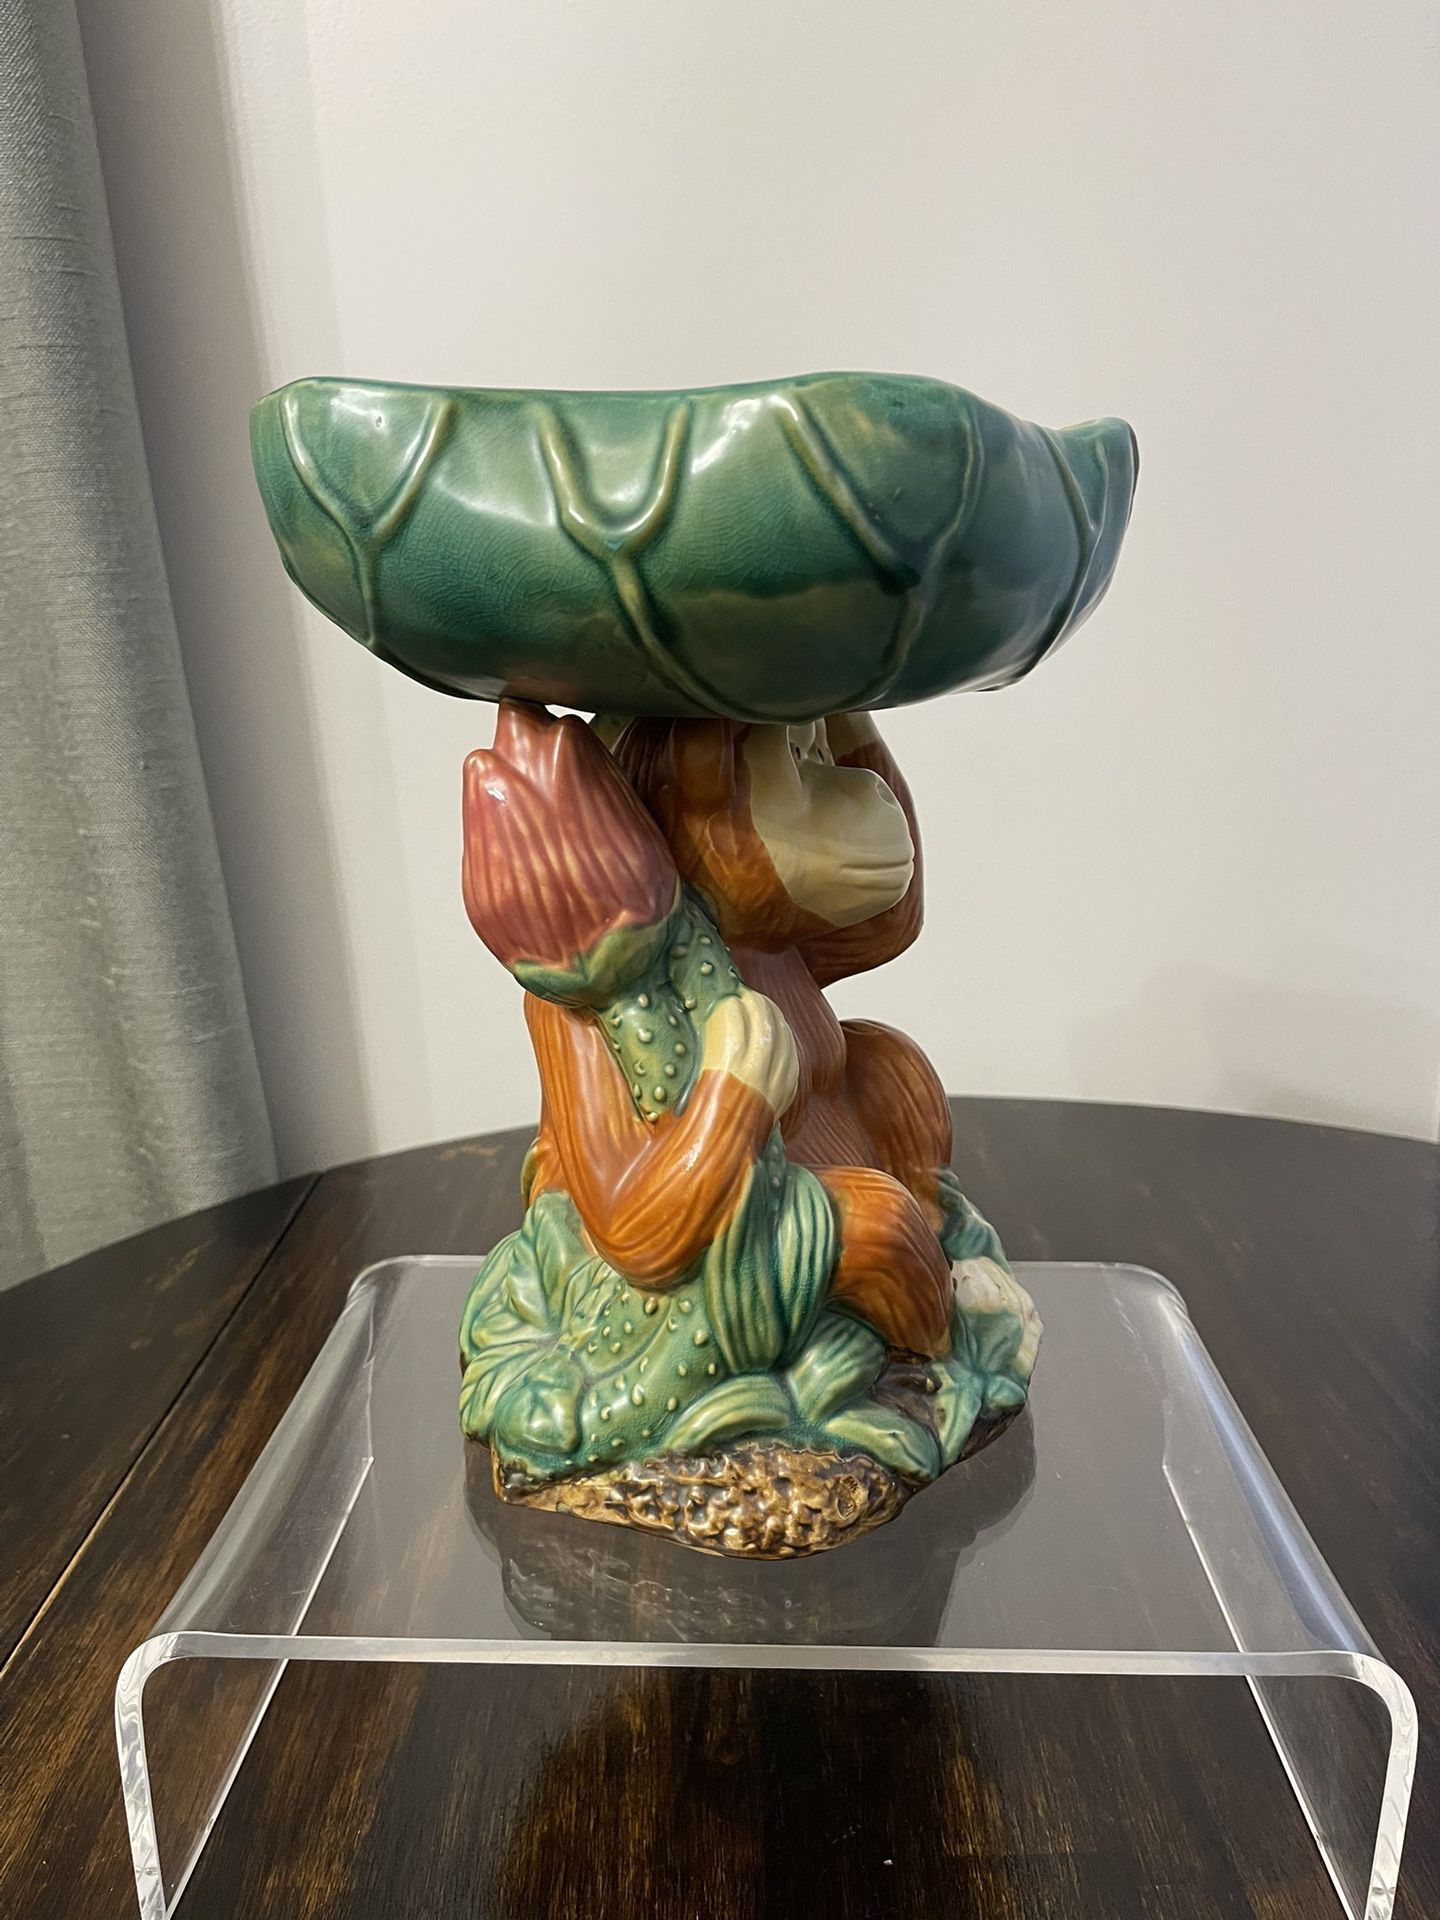  Ceramic Monkey with Bowl on Head